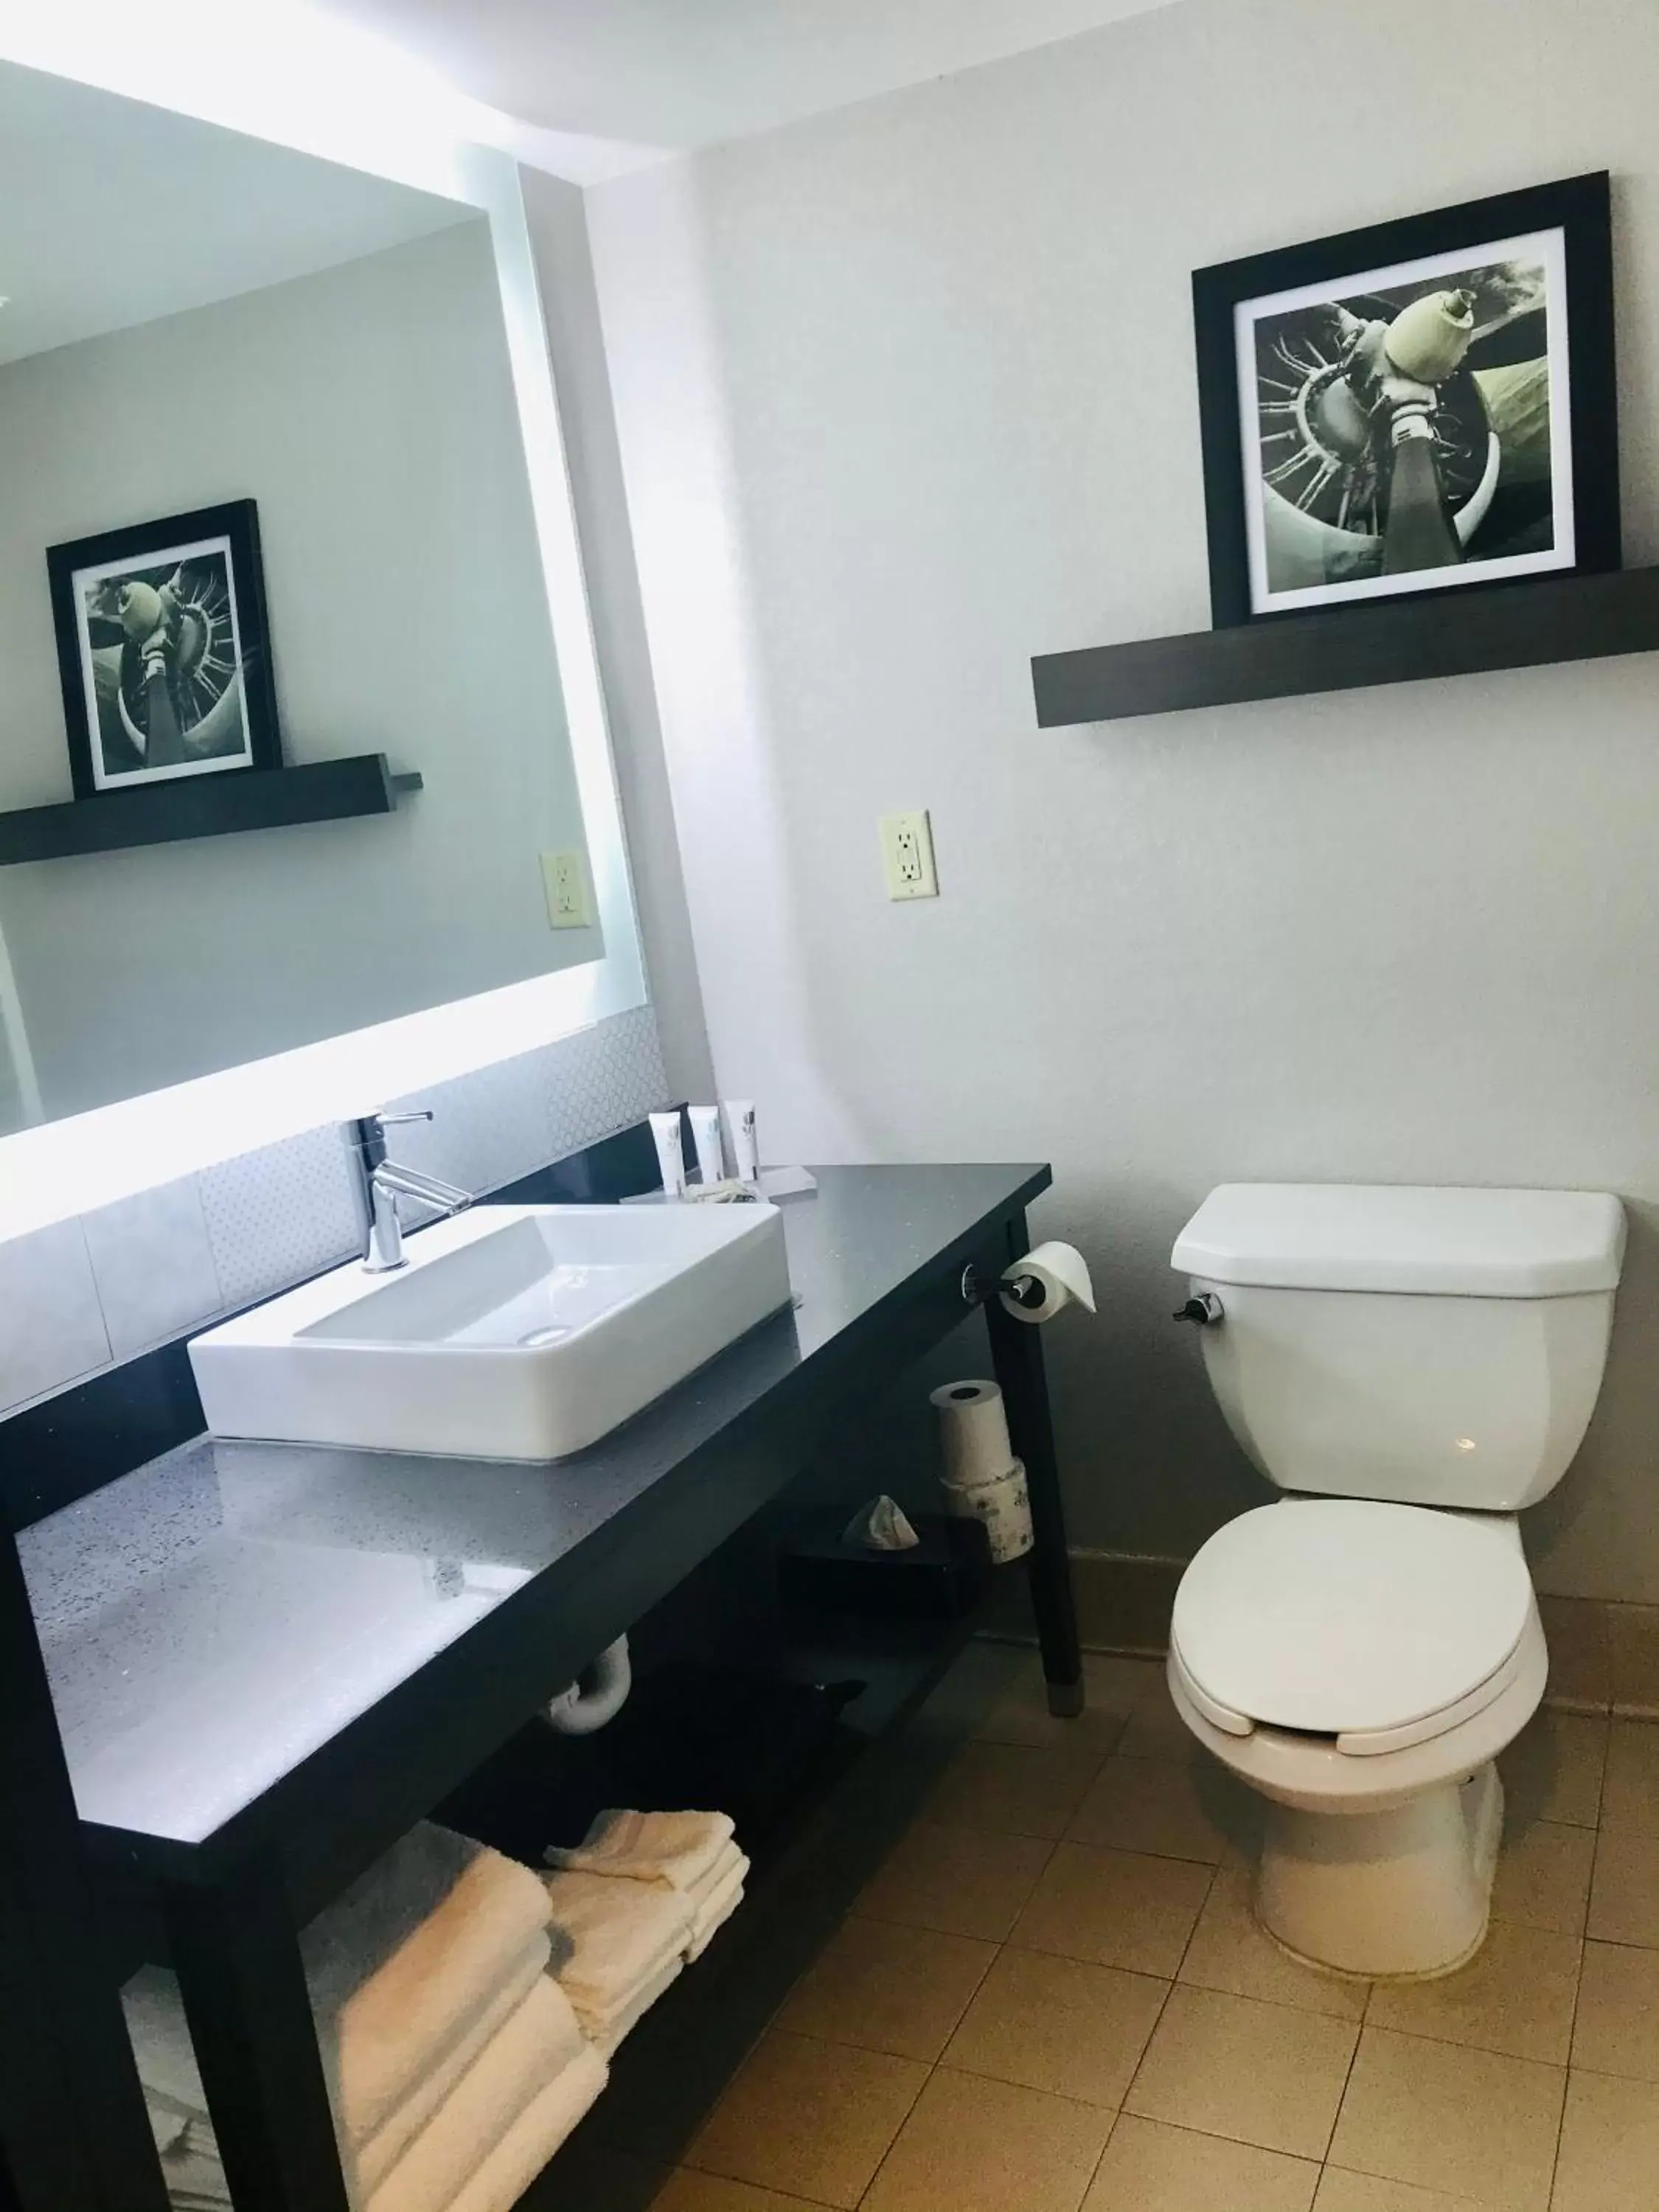 Bathroom in Country Inn & Suites by Radisson, Warner Robins, GA